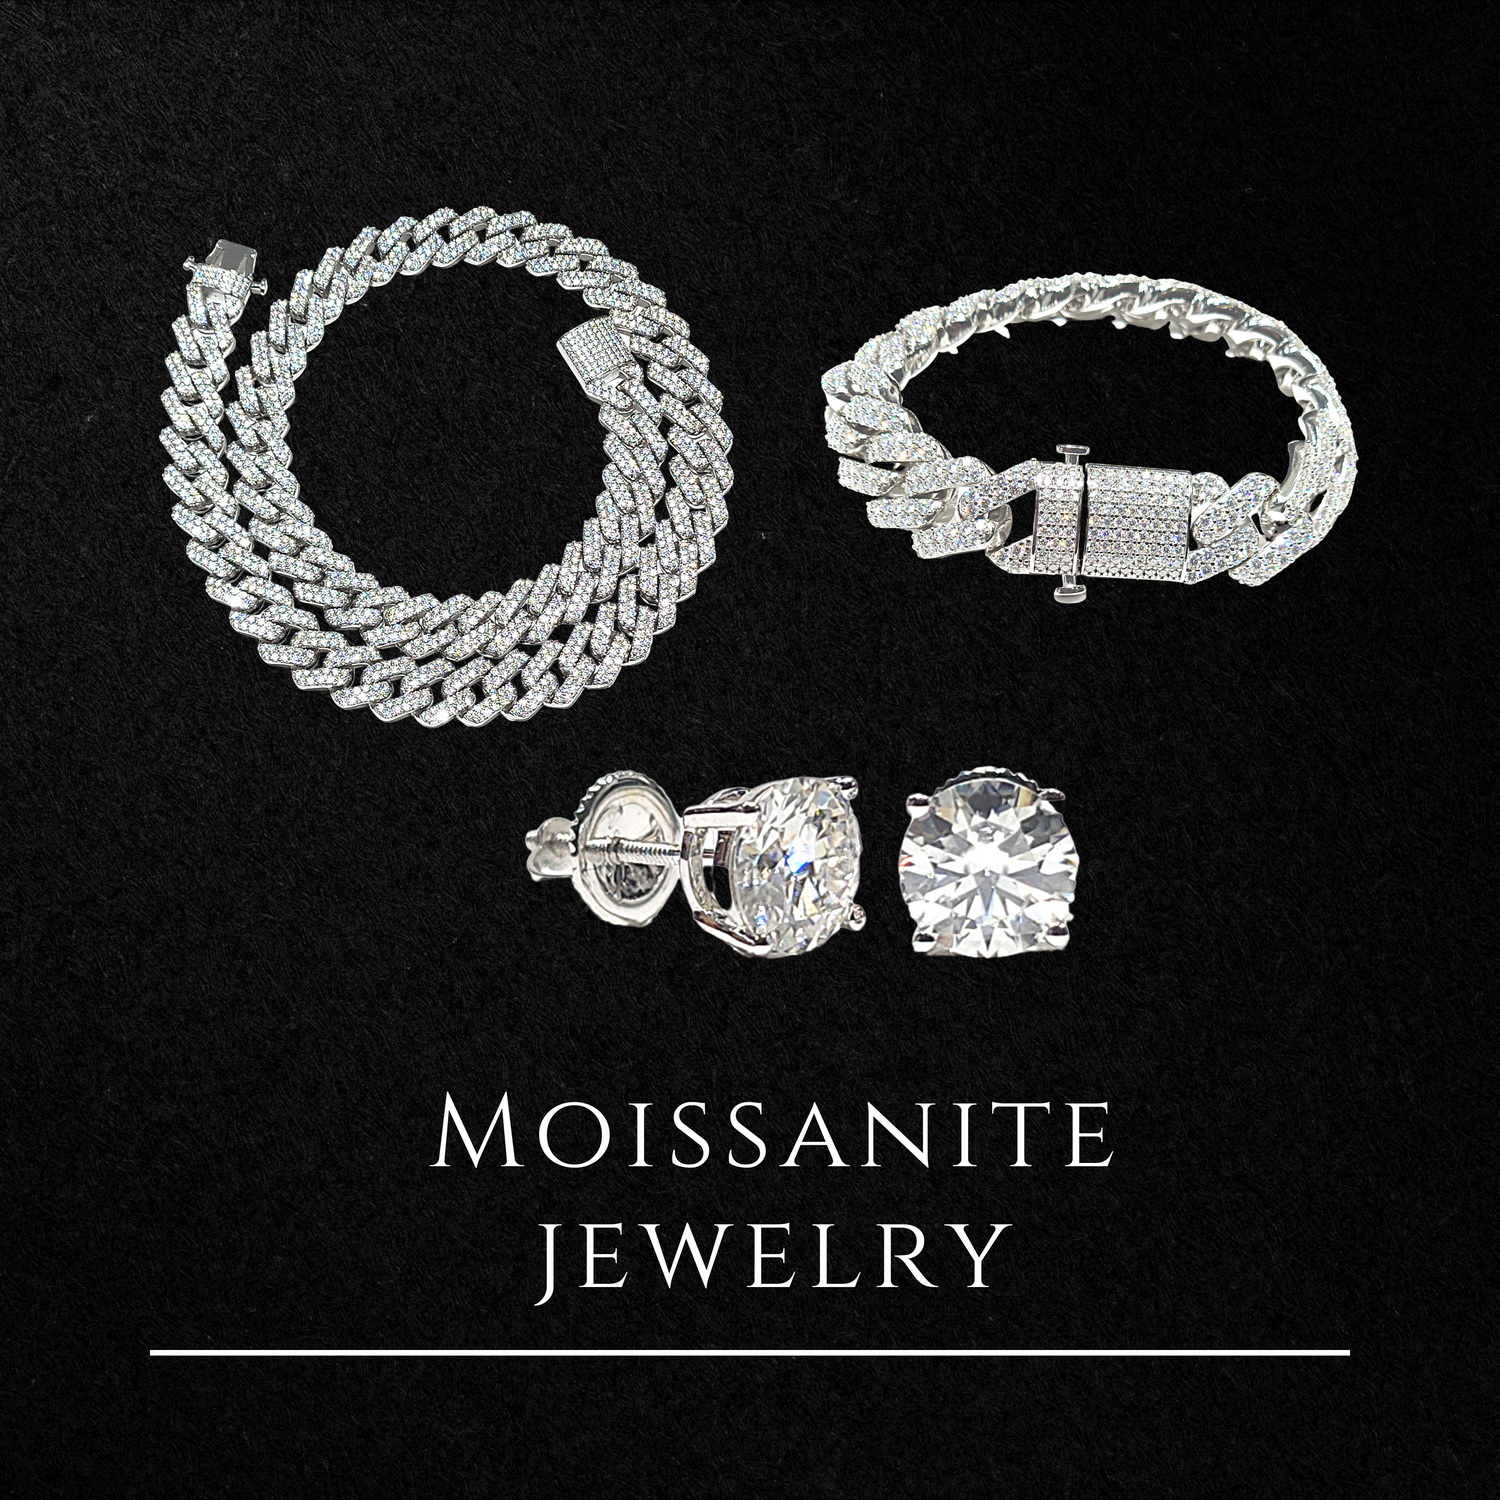 Moissanite jewelry